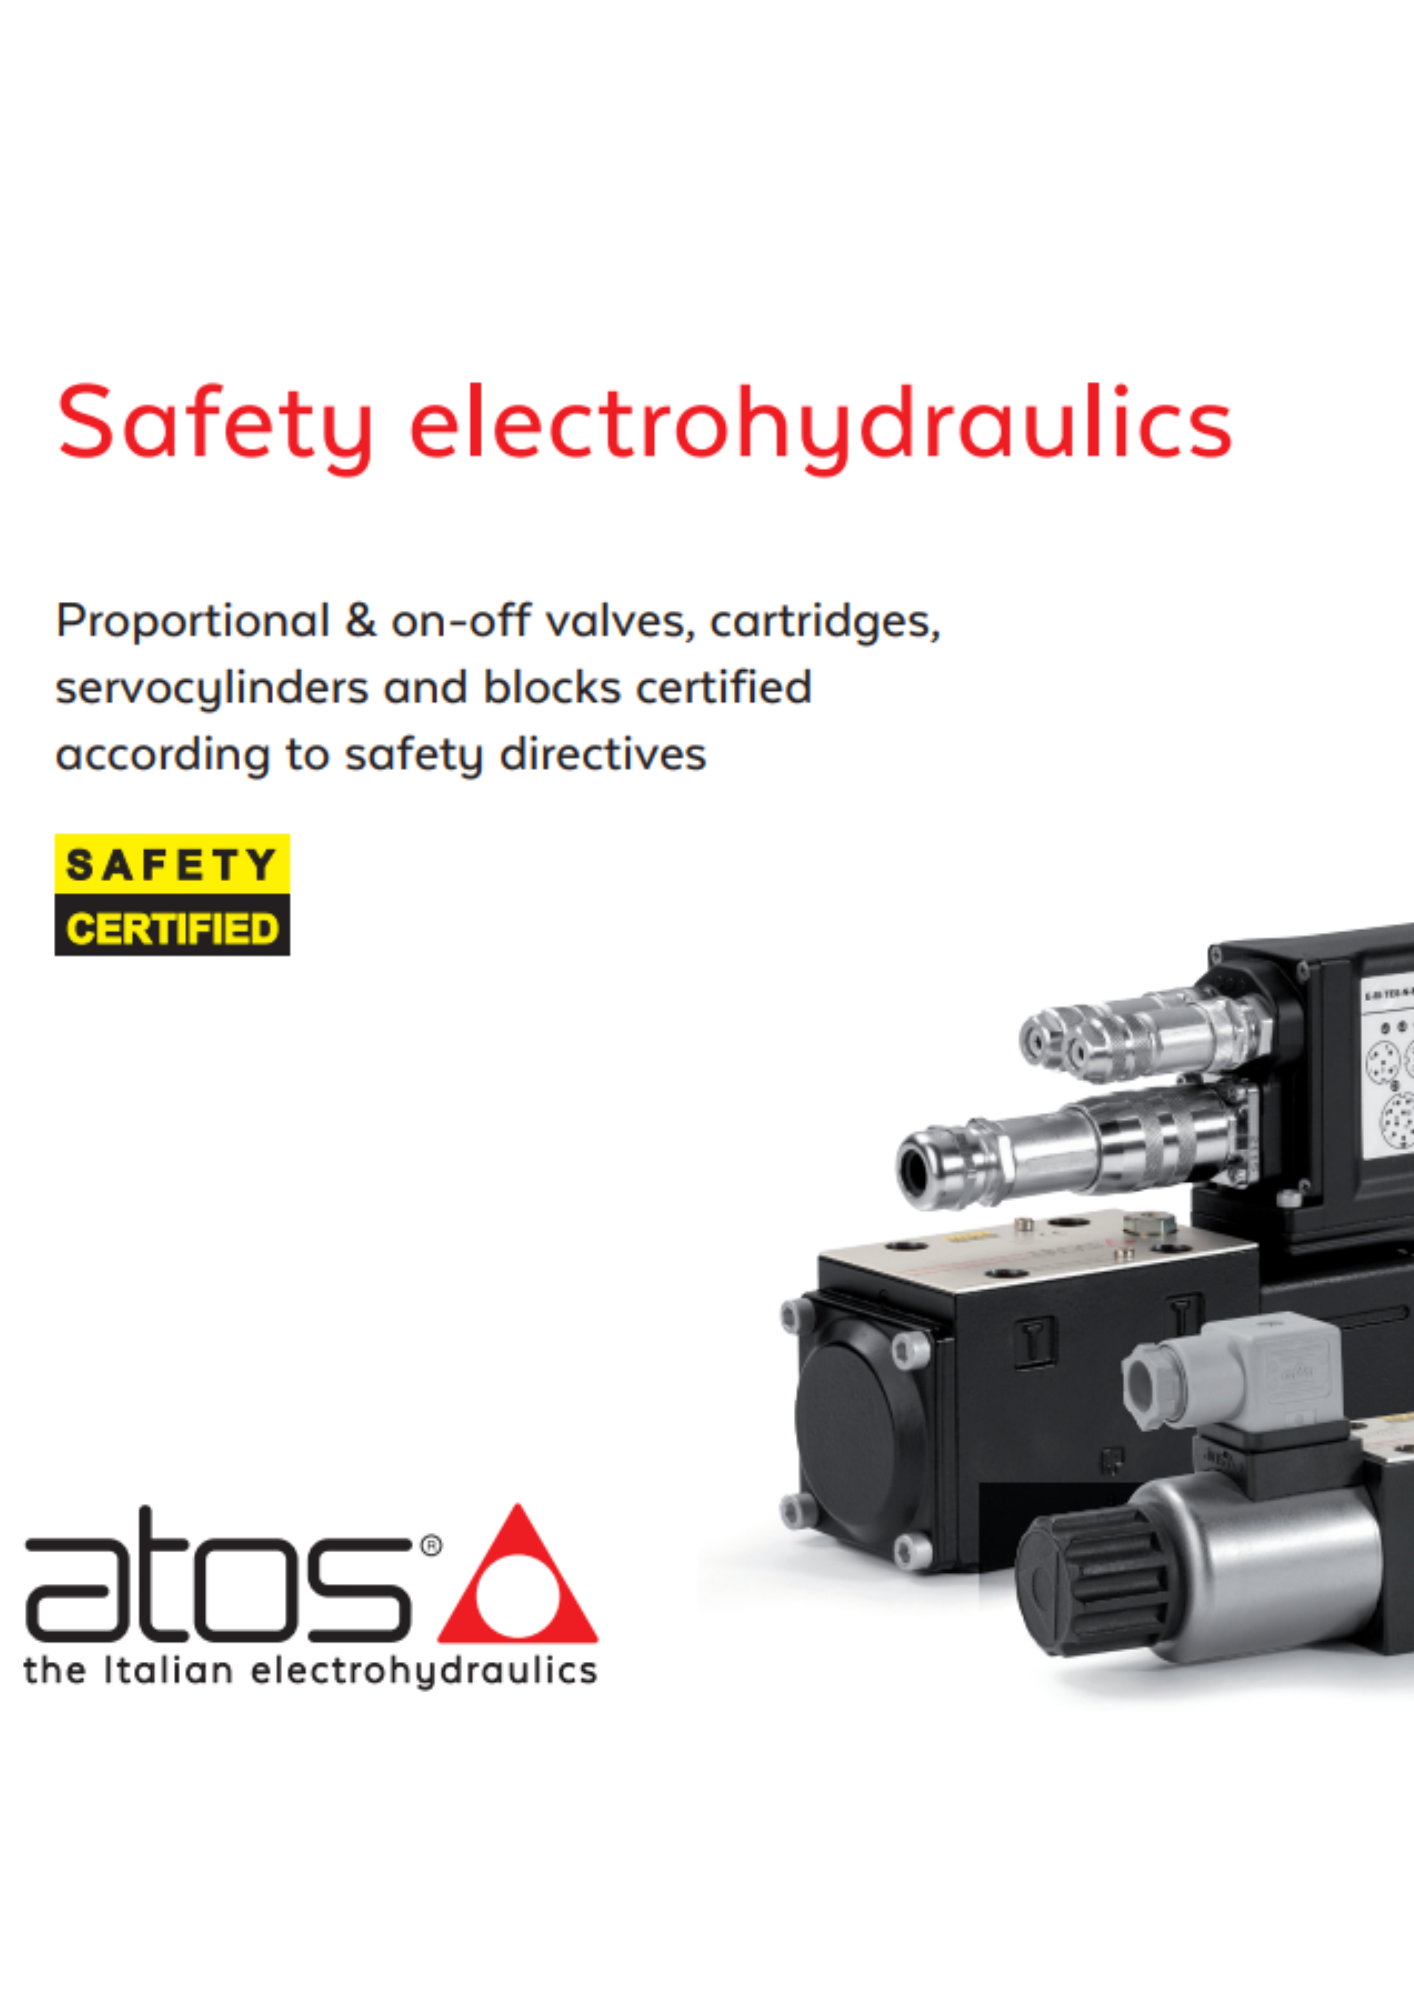 Atos: safety electrohydraulics